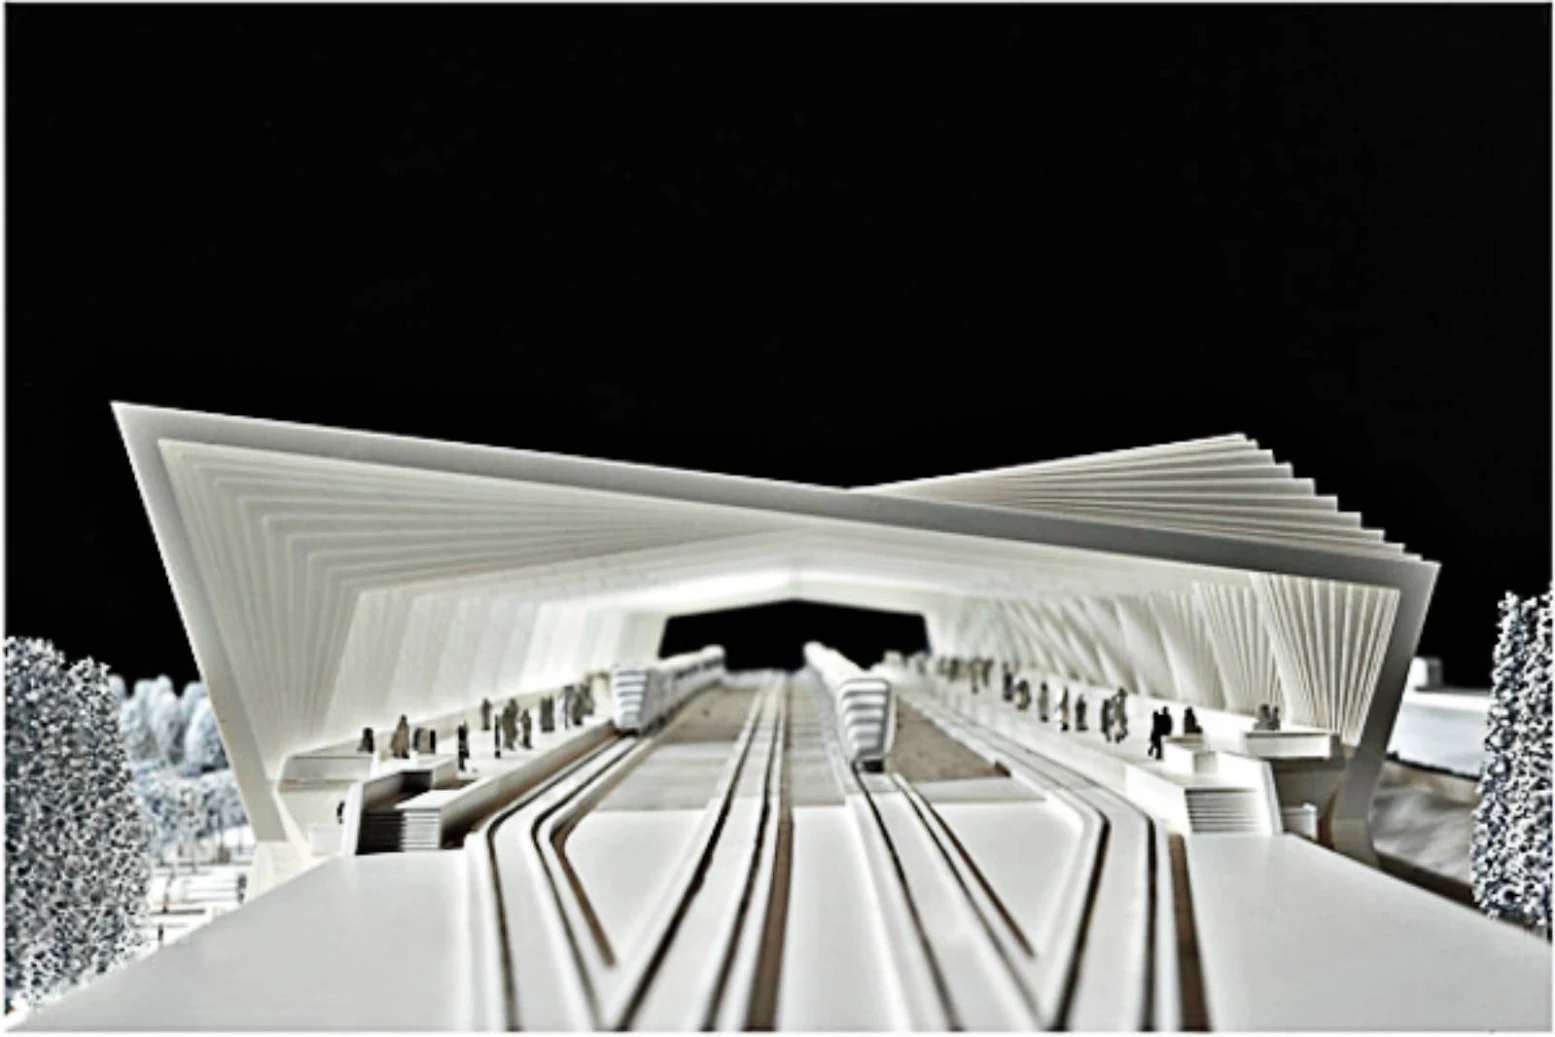 Mediopadana Station by Santiago Calatrava